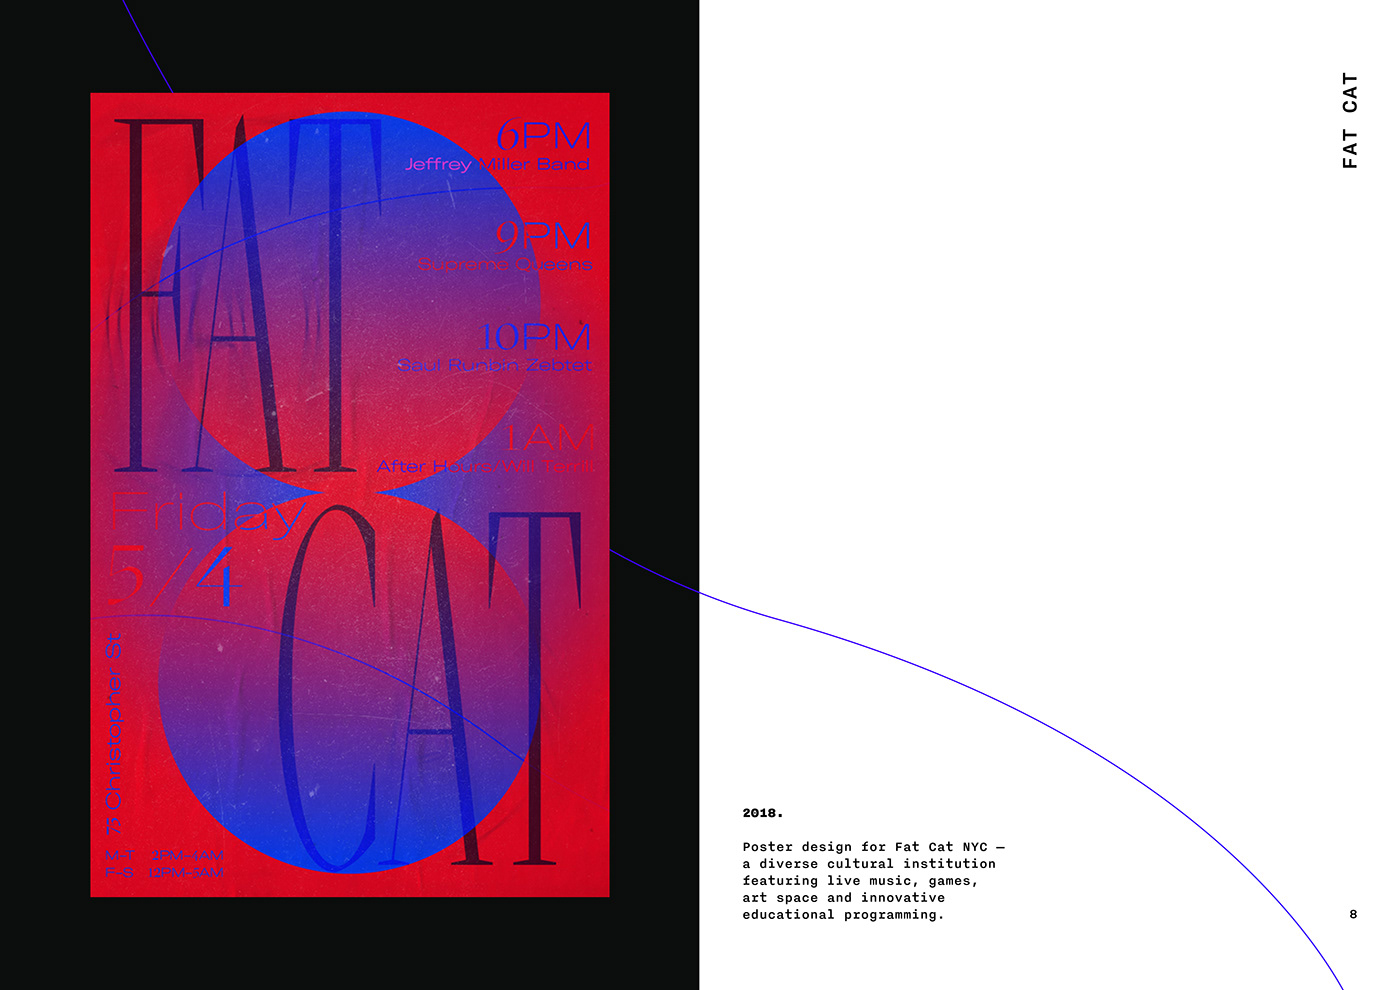 design typography   book design Layout Design GLOSSIER havas chicago portfolio Portfolio Design design portfolio